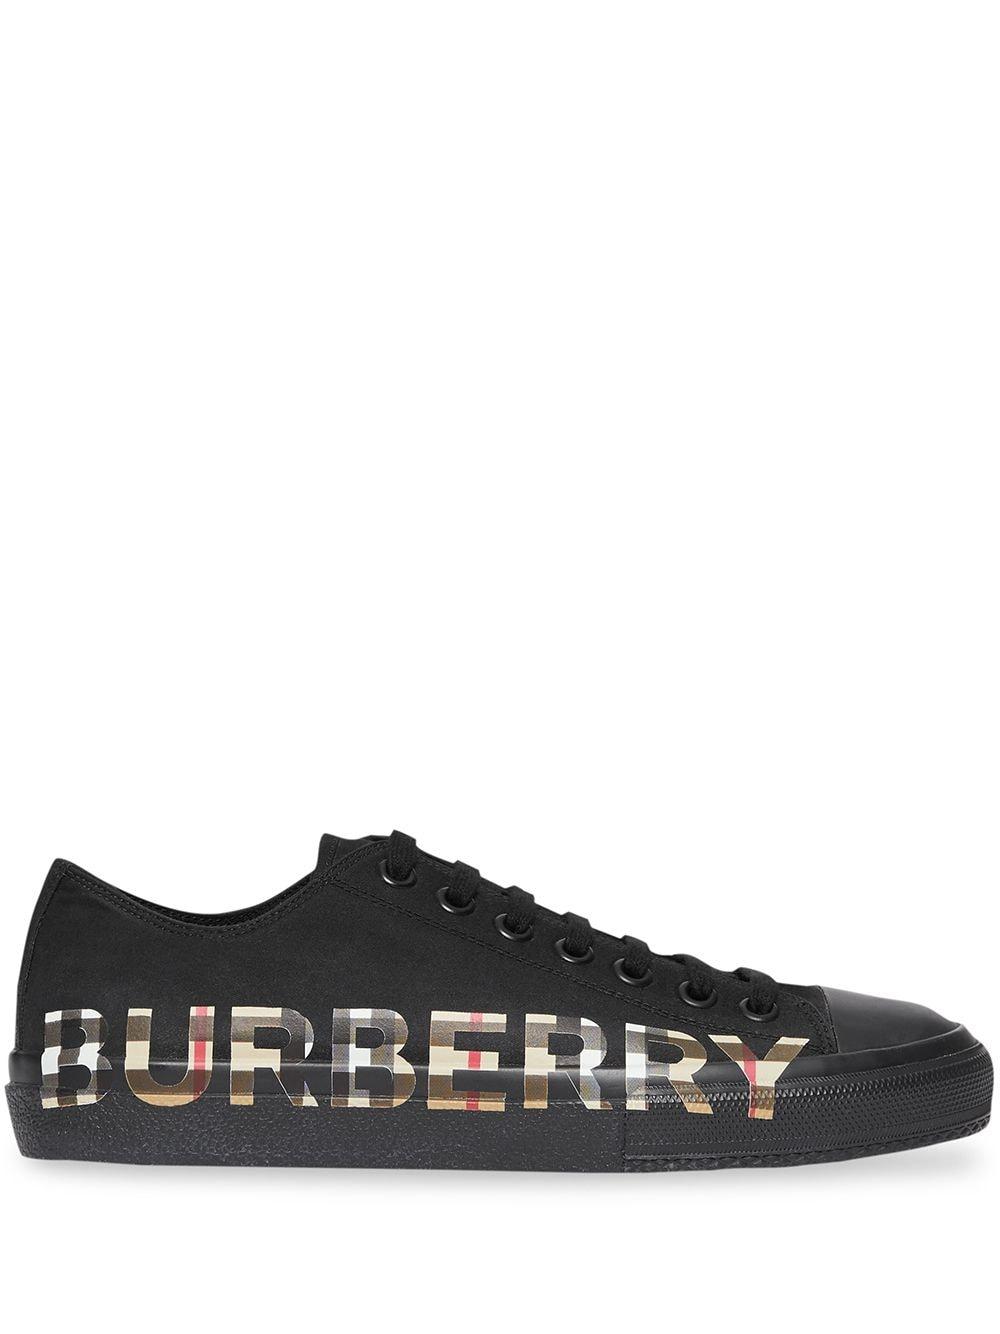 Burberry Contrast Logo Print Sneakers in Black for Men | Lyst